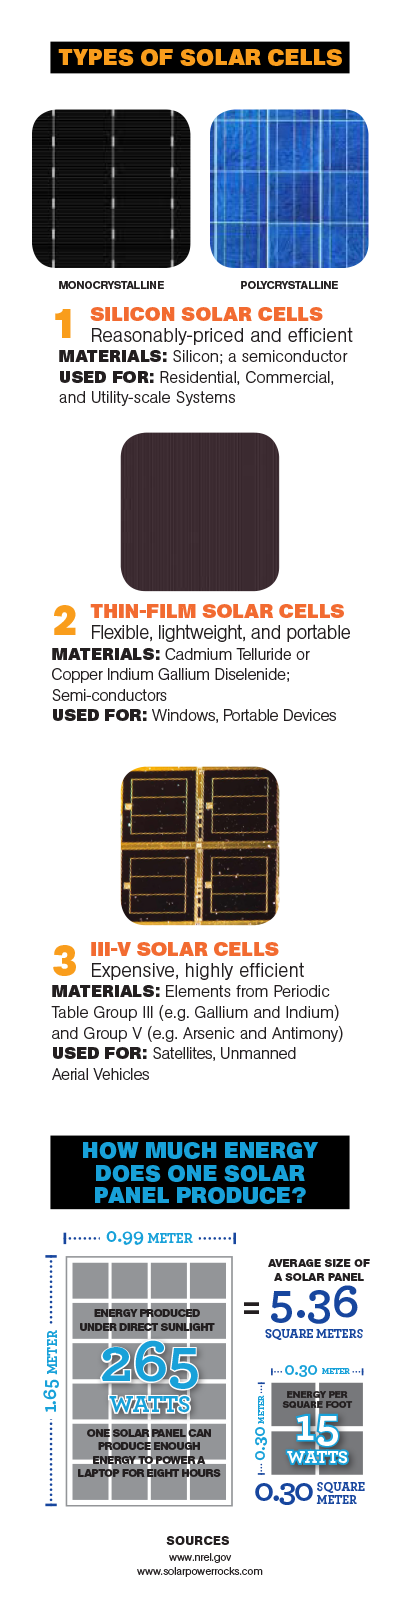 Types of Solar Cells